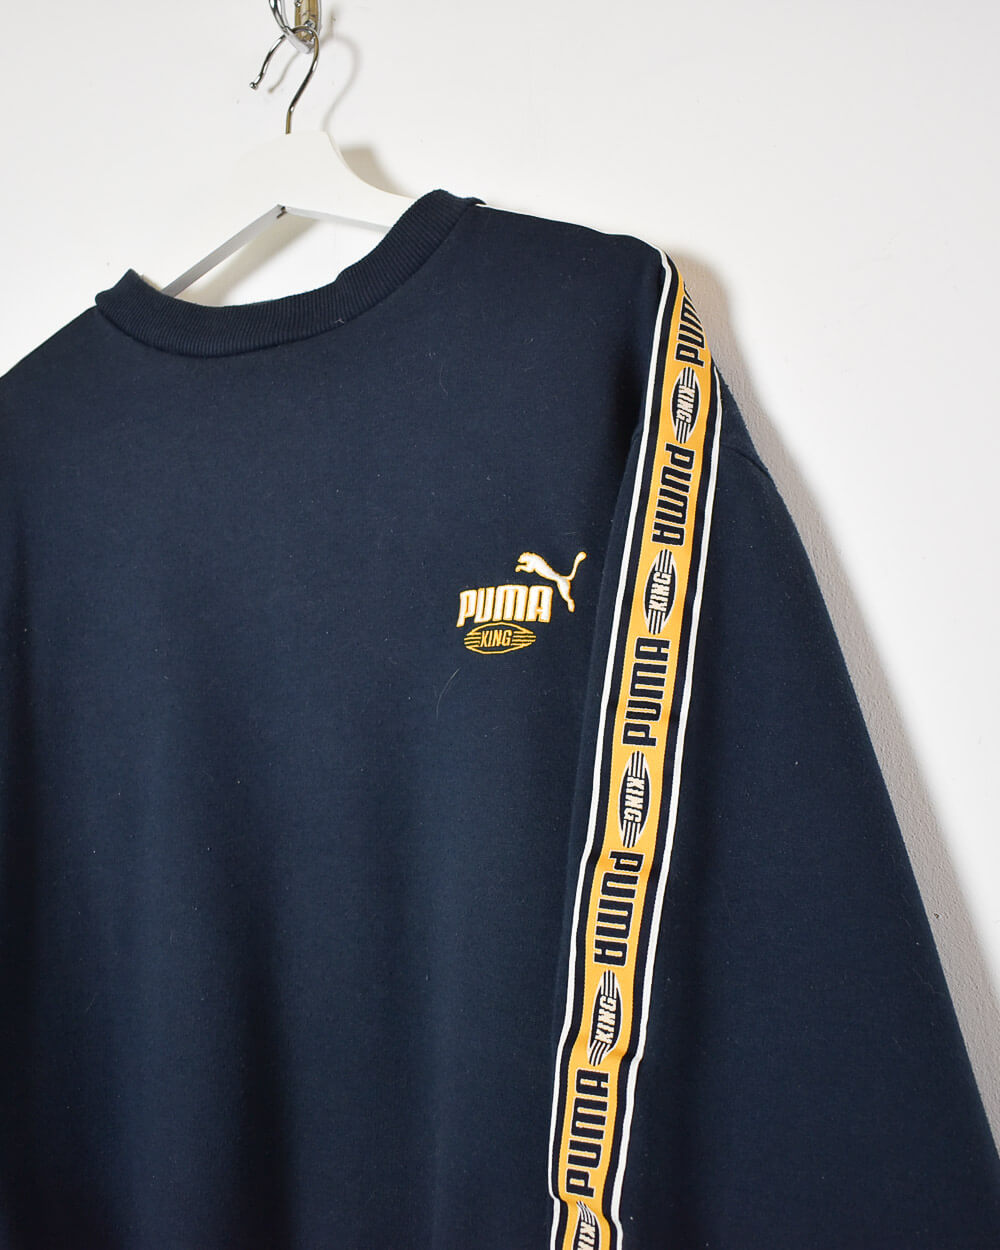 Navy Puma King Sweatshirt - Medium